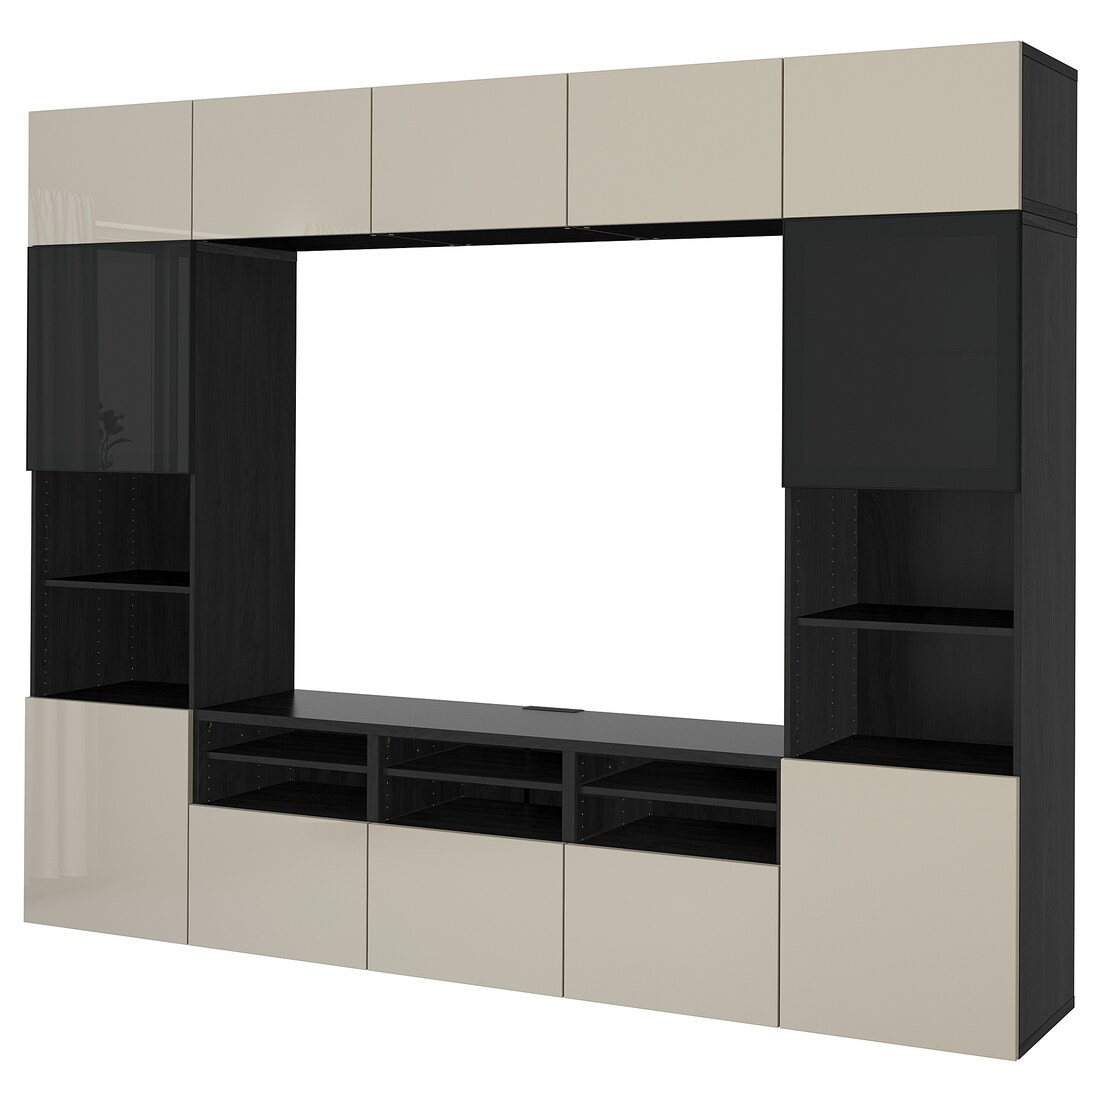 IKEA BESTÅ БЕСТО Комбинация для ТВ / стеклянные двери, черно-коричневый / Selsviken глянцевый / бежевое дымчатое стекло, 300x42x231 см 19411030 | 194.110.30